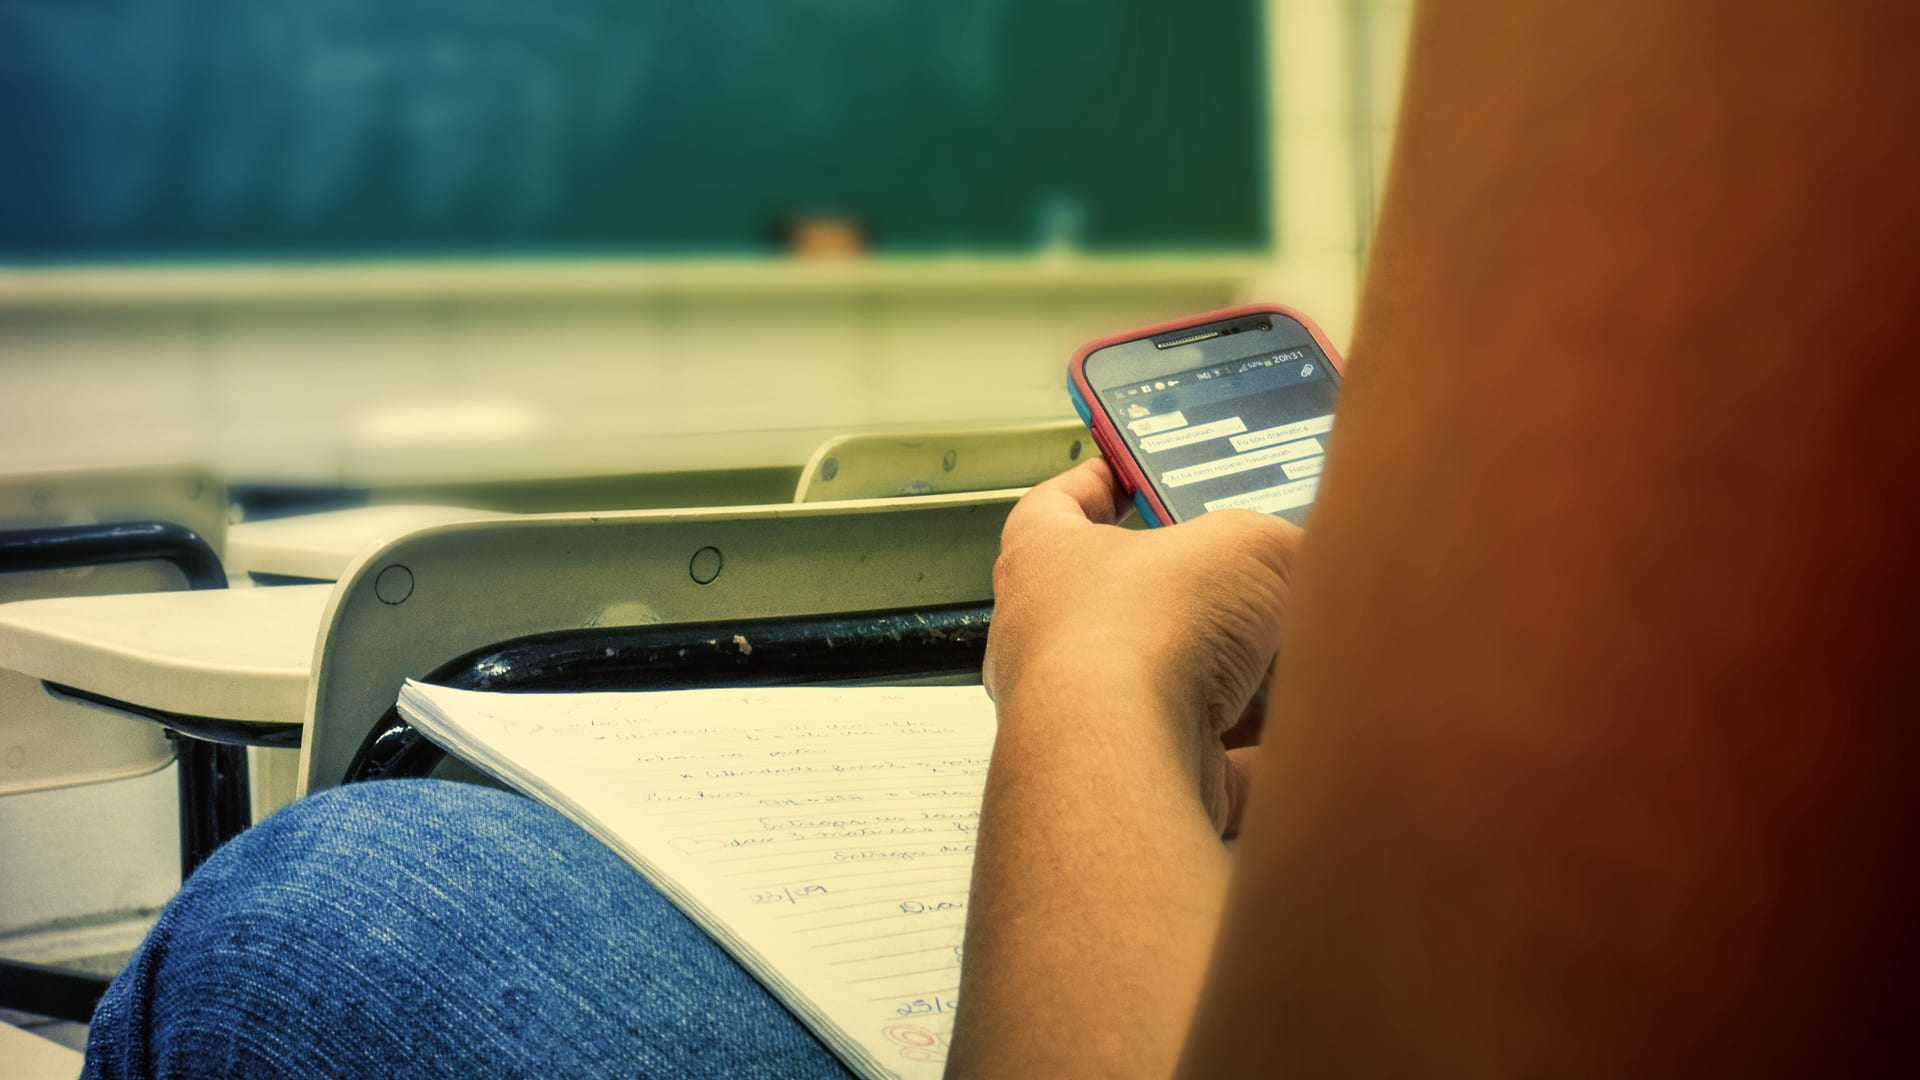 California lawmakers introduce bill to ban all smartphones at schools